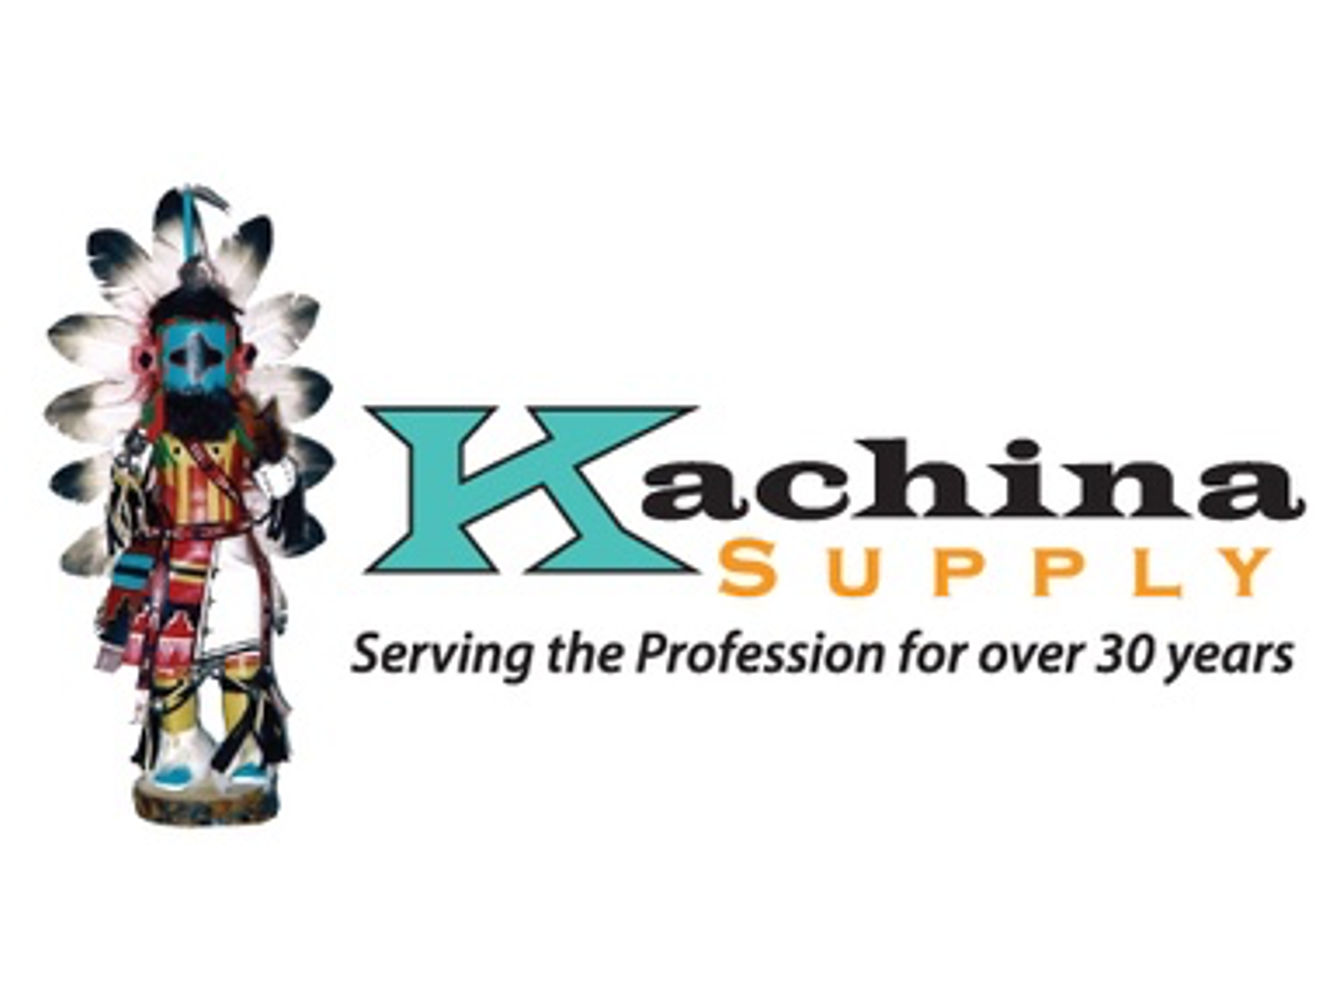 Kachina Supply Inc